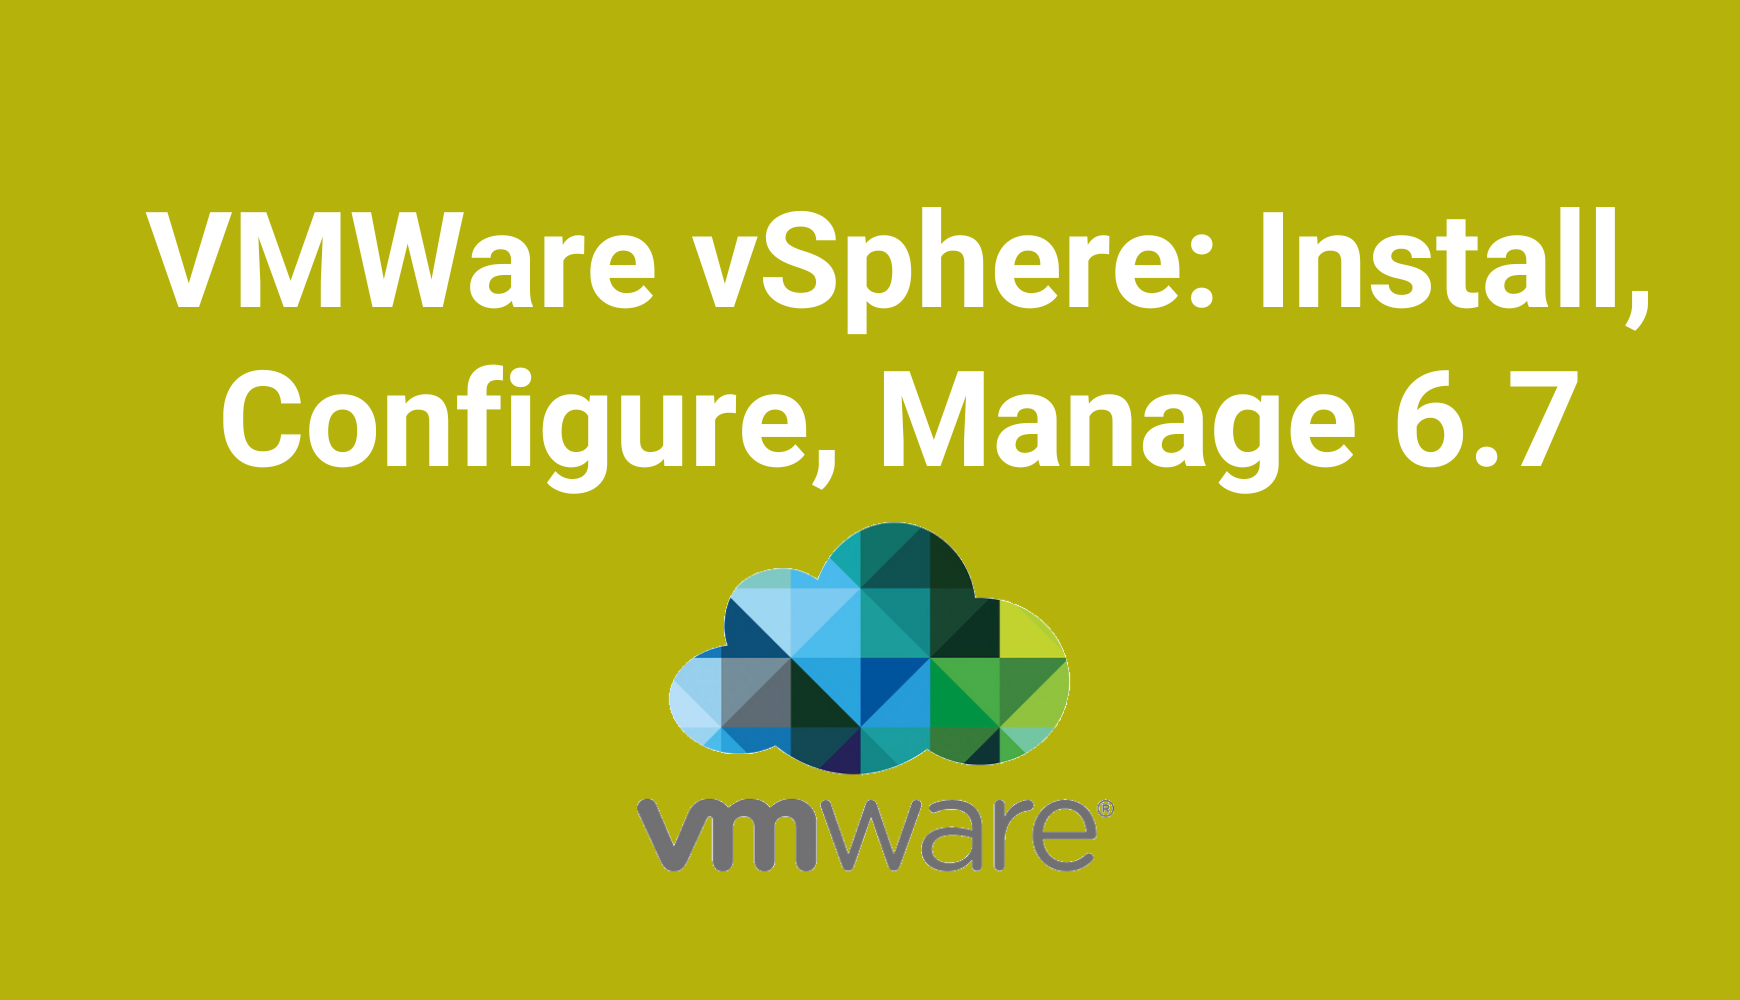 VMware vSphere: Install, Configure, Manage 6.7